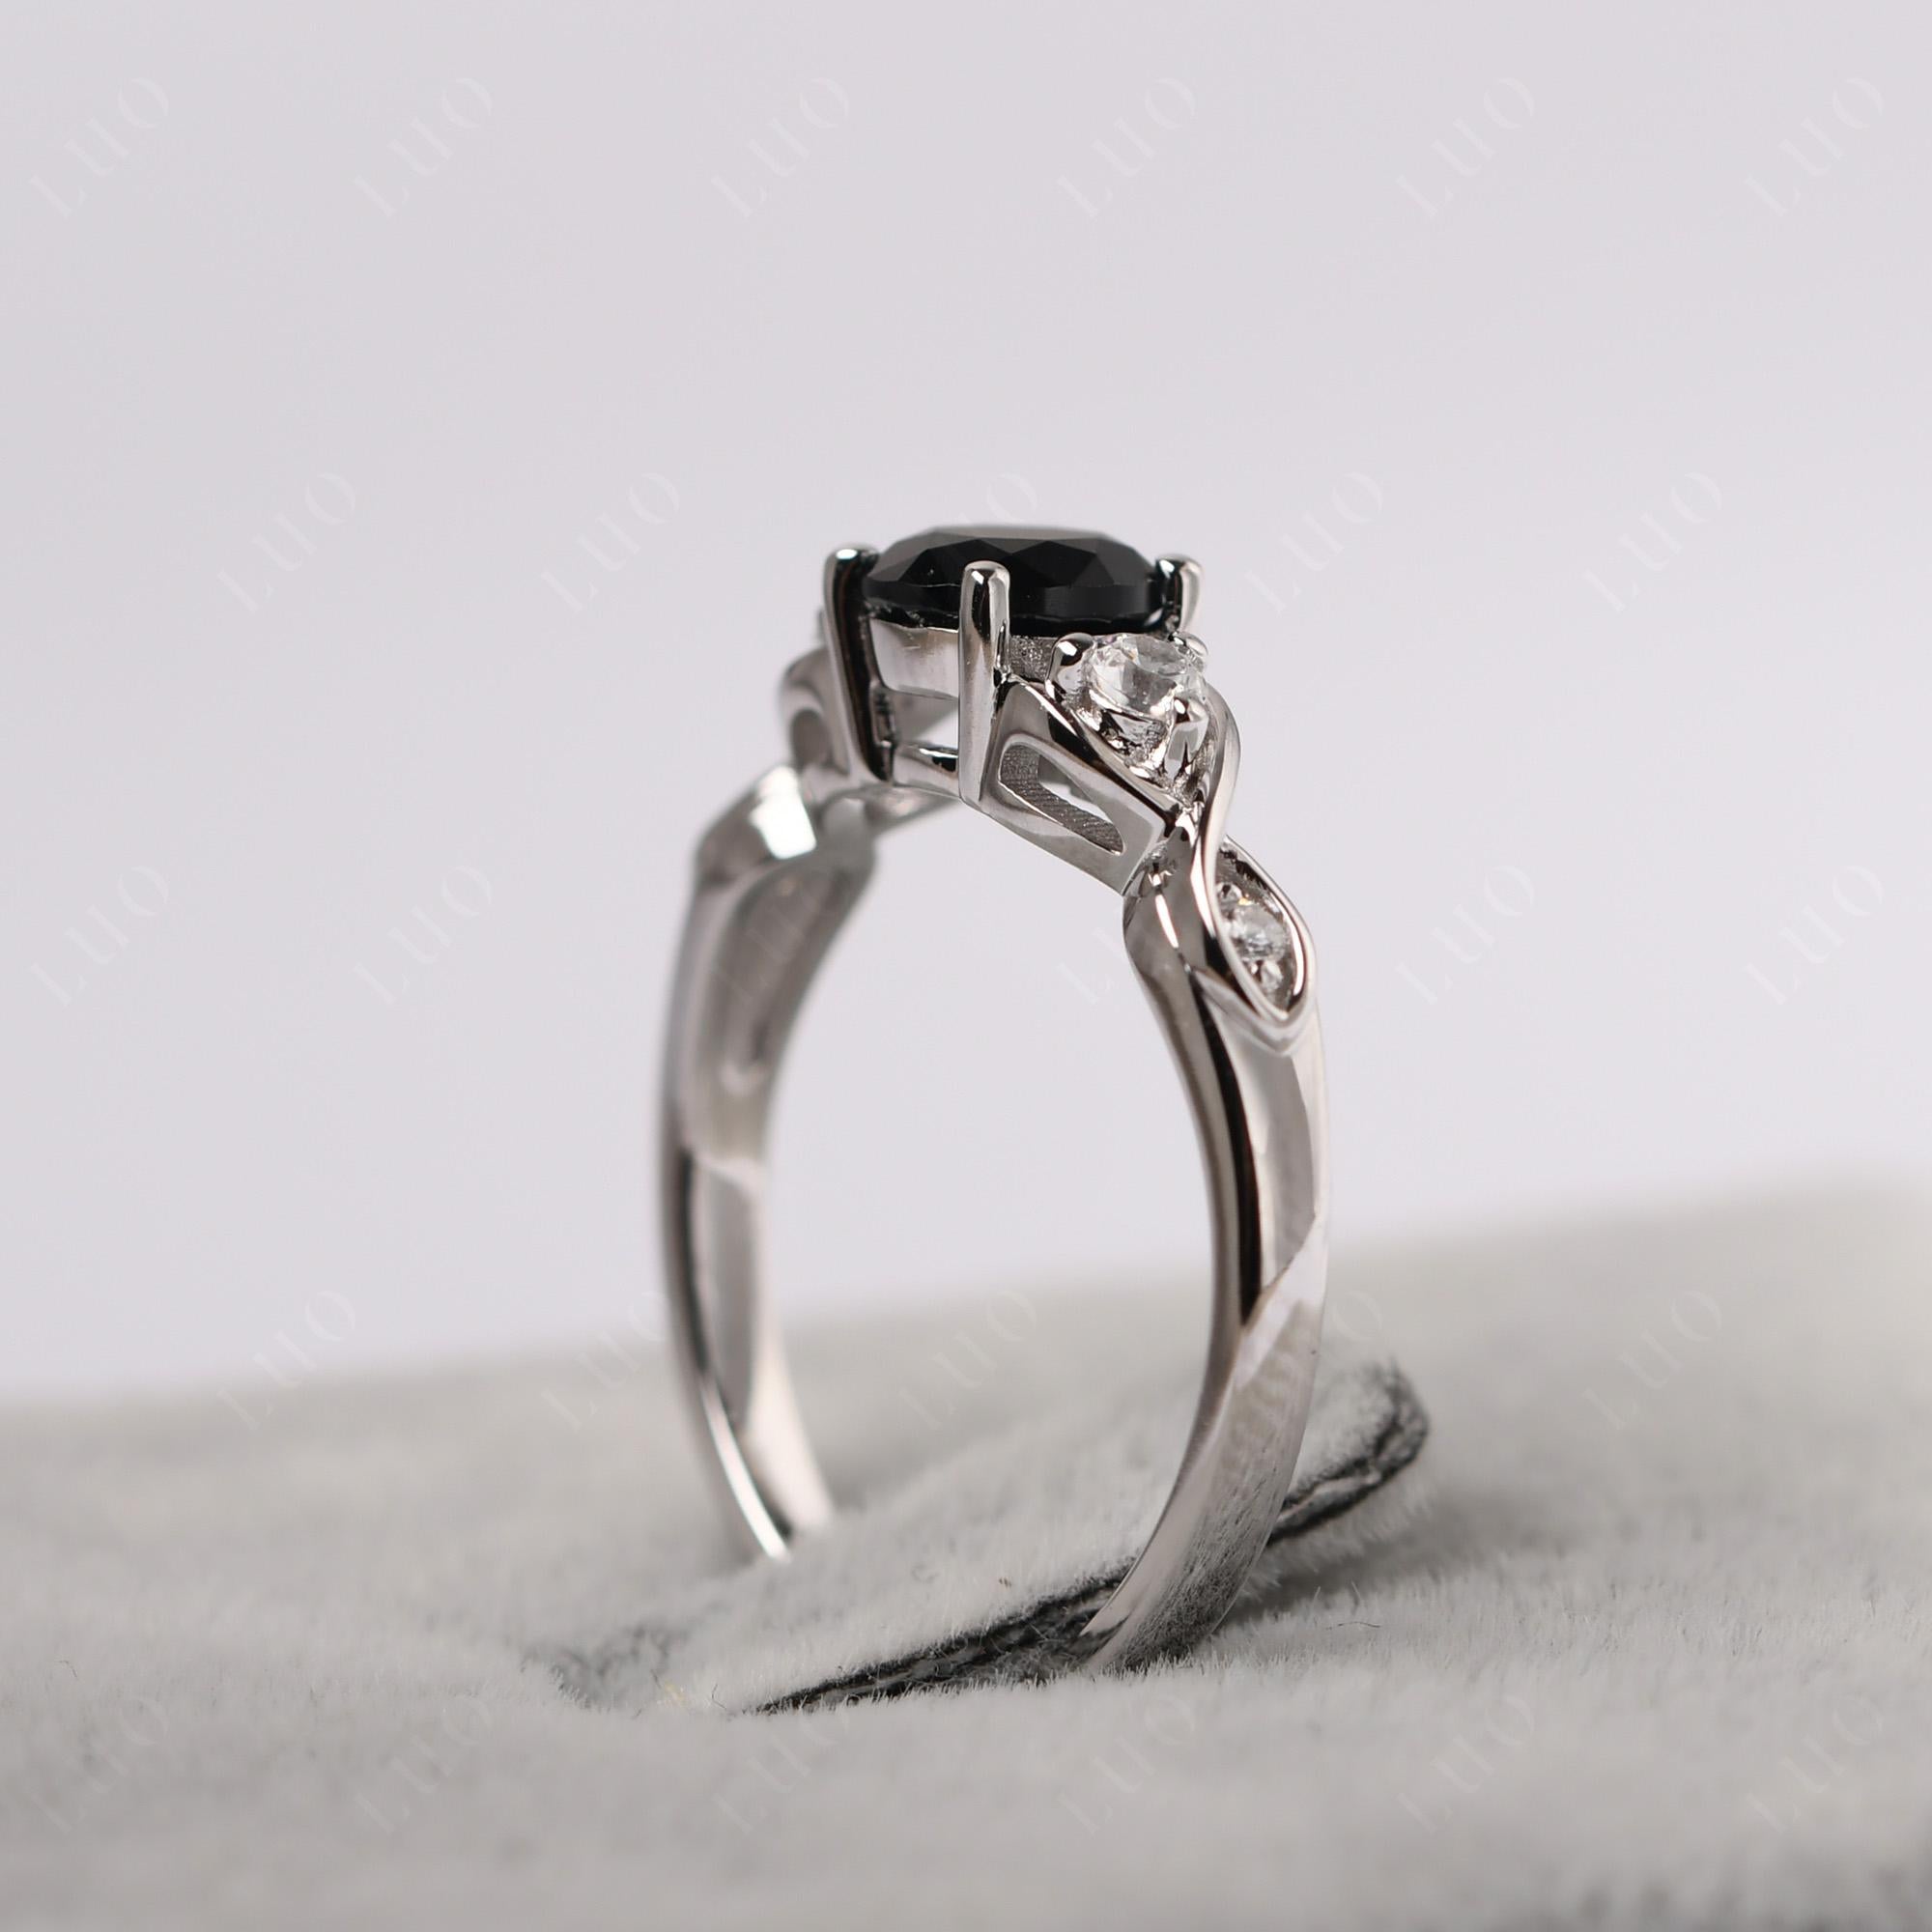 Round Black Stone Ring Wedding Ring - LUO Jewelry